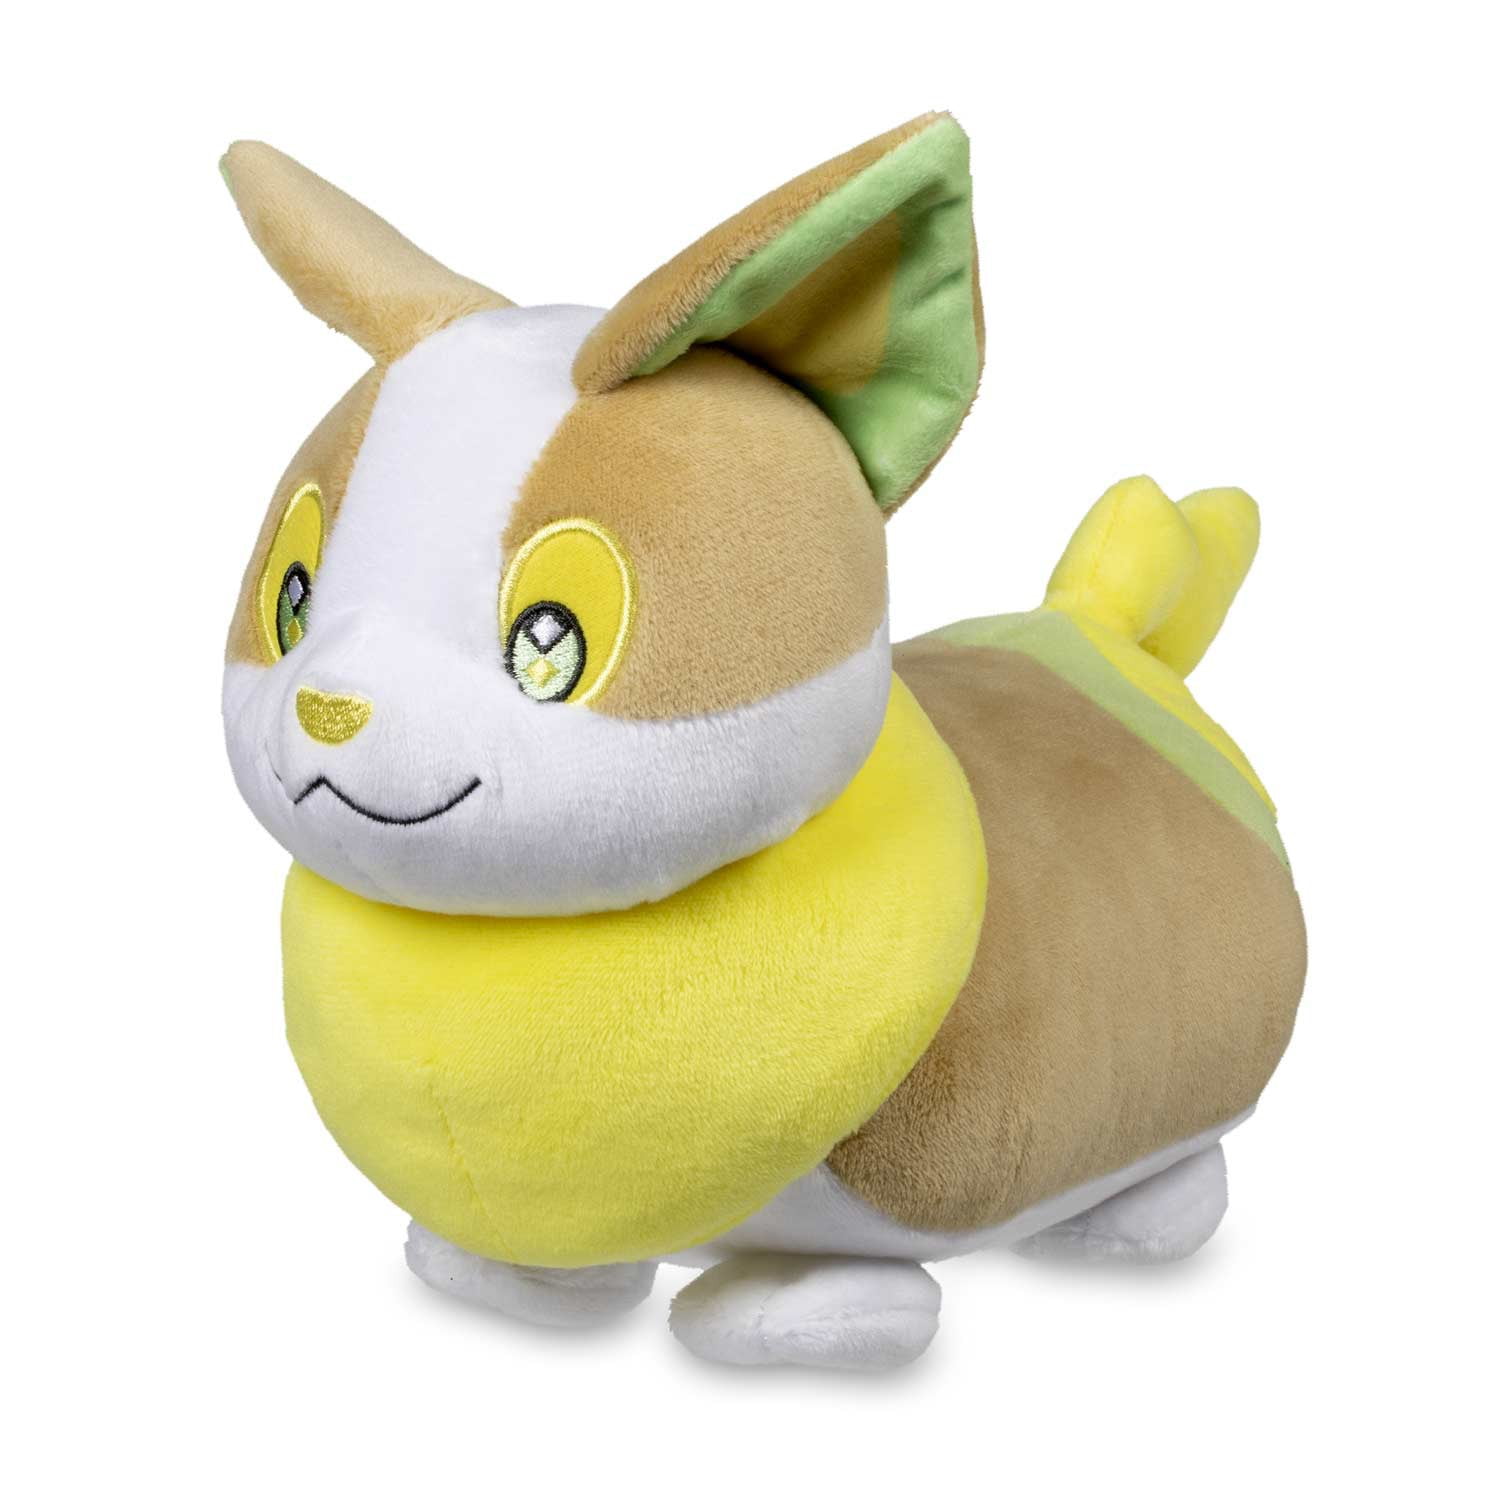 Pokémon 8 Yamper Plush Age 2+ Officially Licensed Corgi Stuffed Animal Toy 